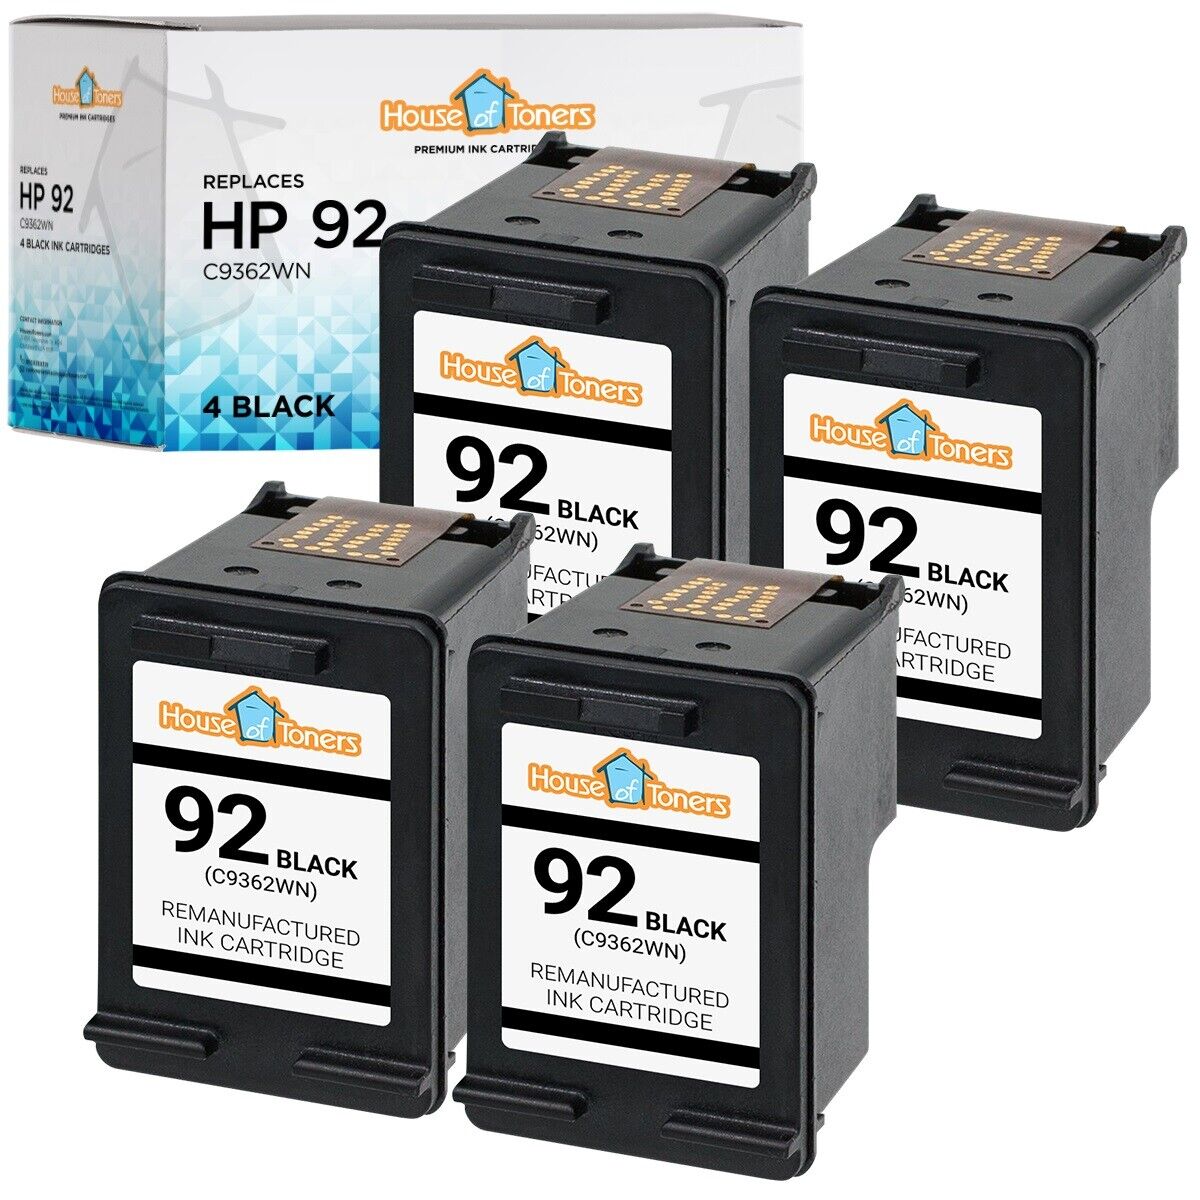 4PK for HP 92 C9362WN Black Ink Cartridge fits HP Officejet 6310 6310v 6310xi